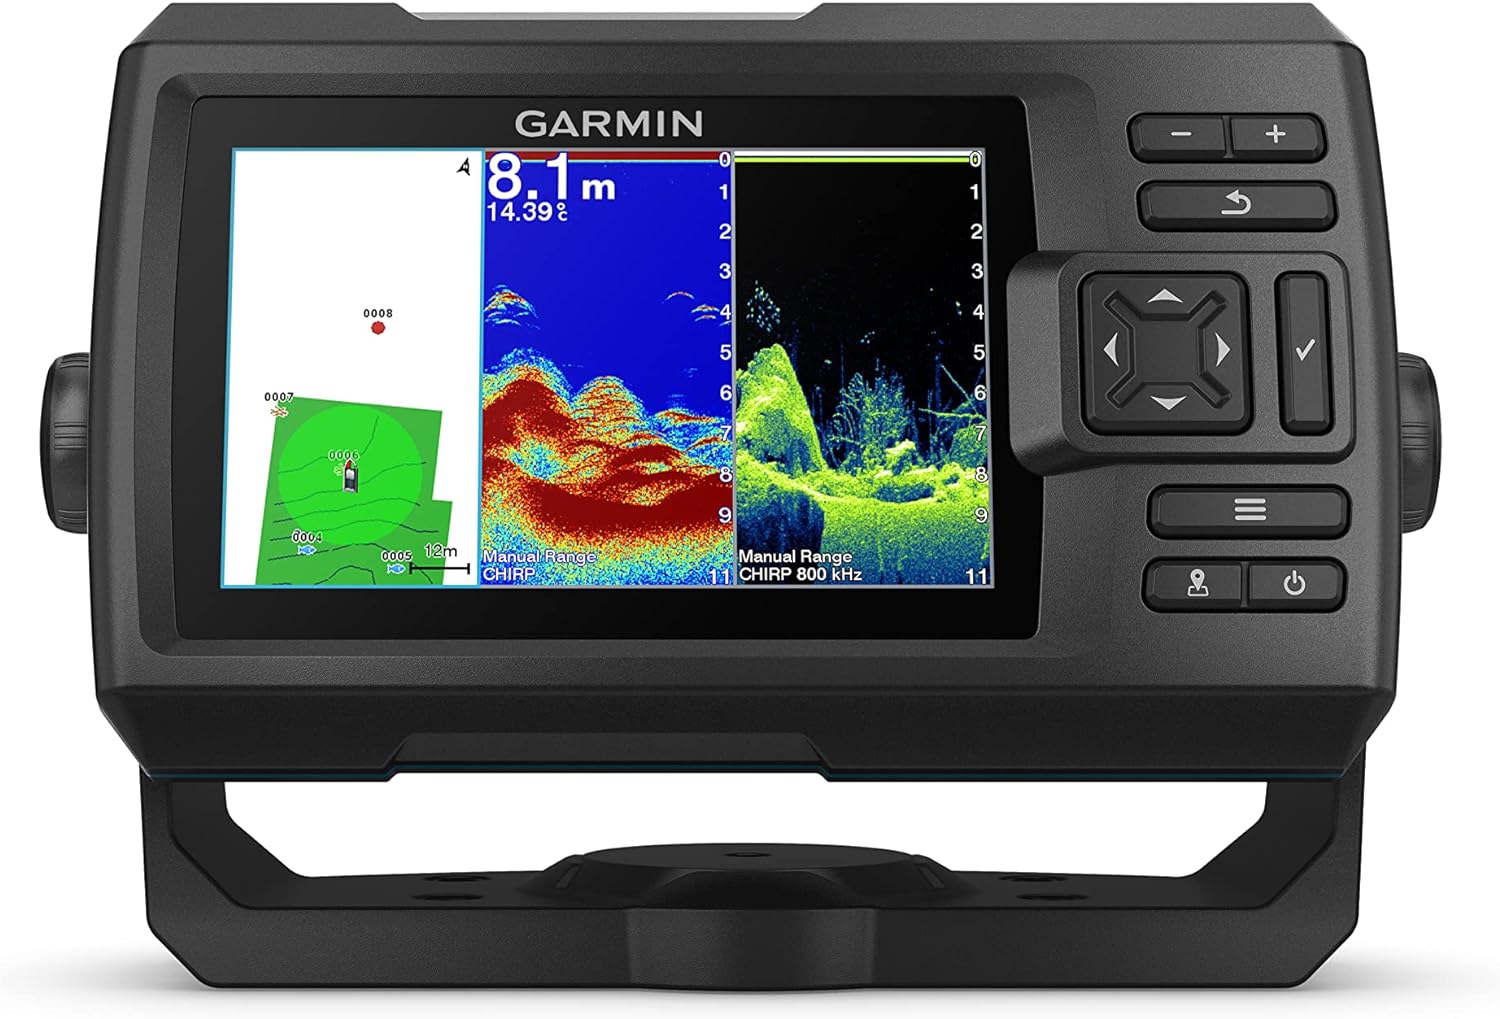 Garmin Striker Vivid 5cv, Easy-to-Use 5-inch Color Fishfinder and Sonar Transducer, Vivid Scanning Sonar Color Palettes (010-02551-00) - Garmin Striker Vivid 5cv Fishfinder Review